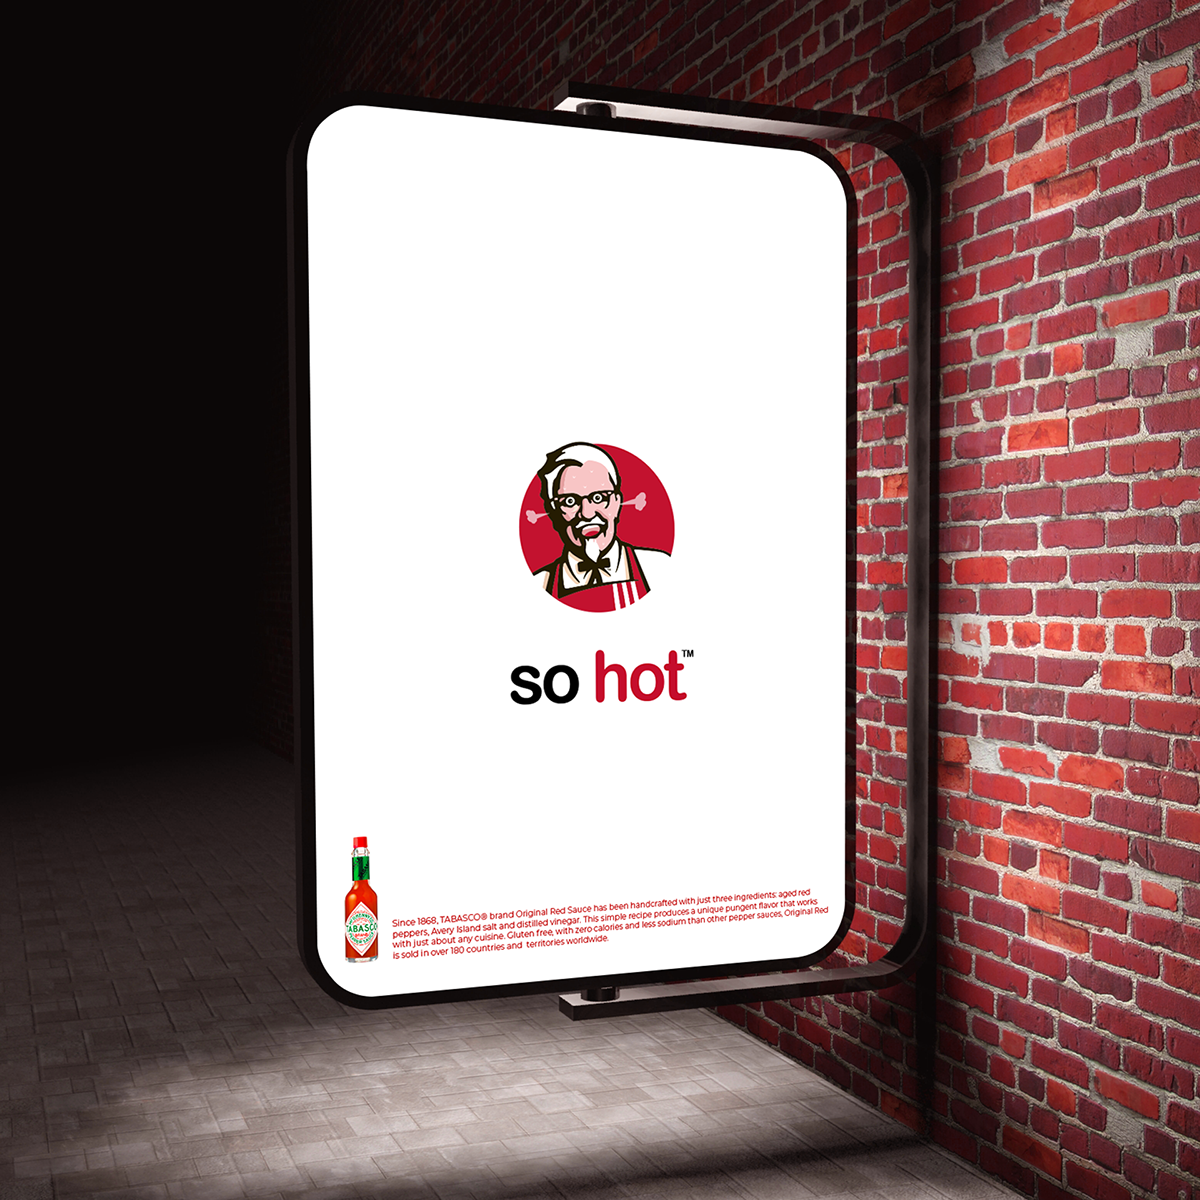 tabasco creative Advertising  ketchup flame ads Minimalism creative advertising manipulation retouch